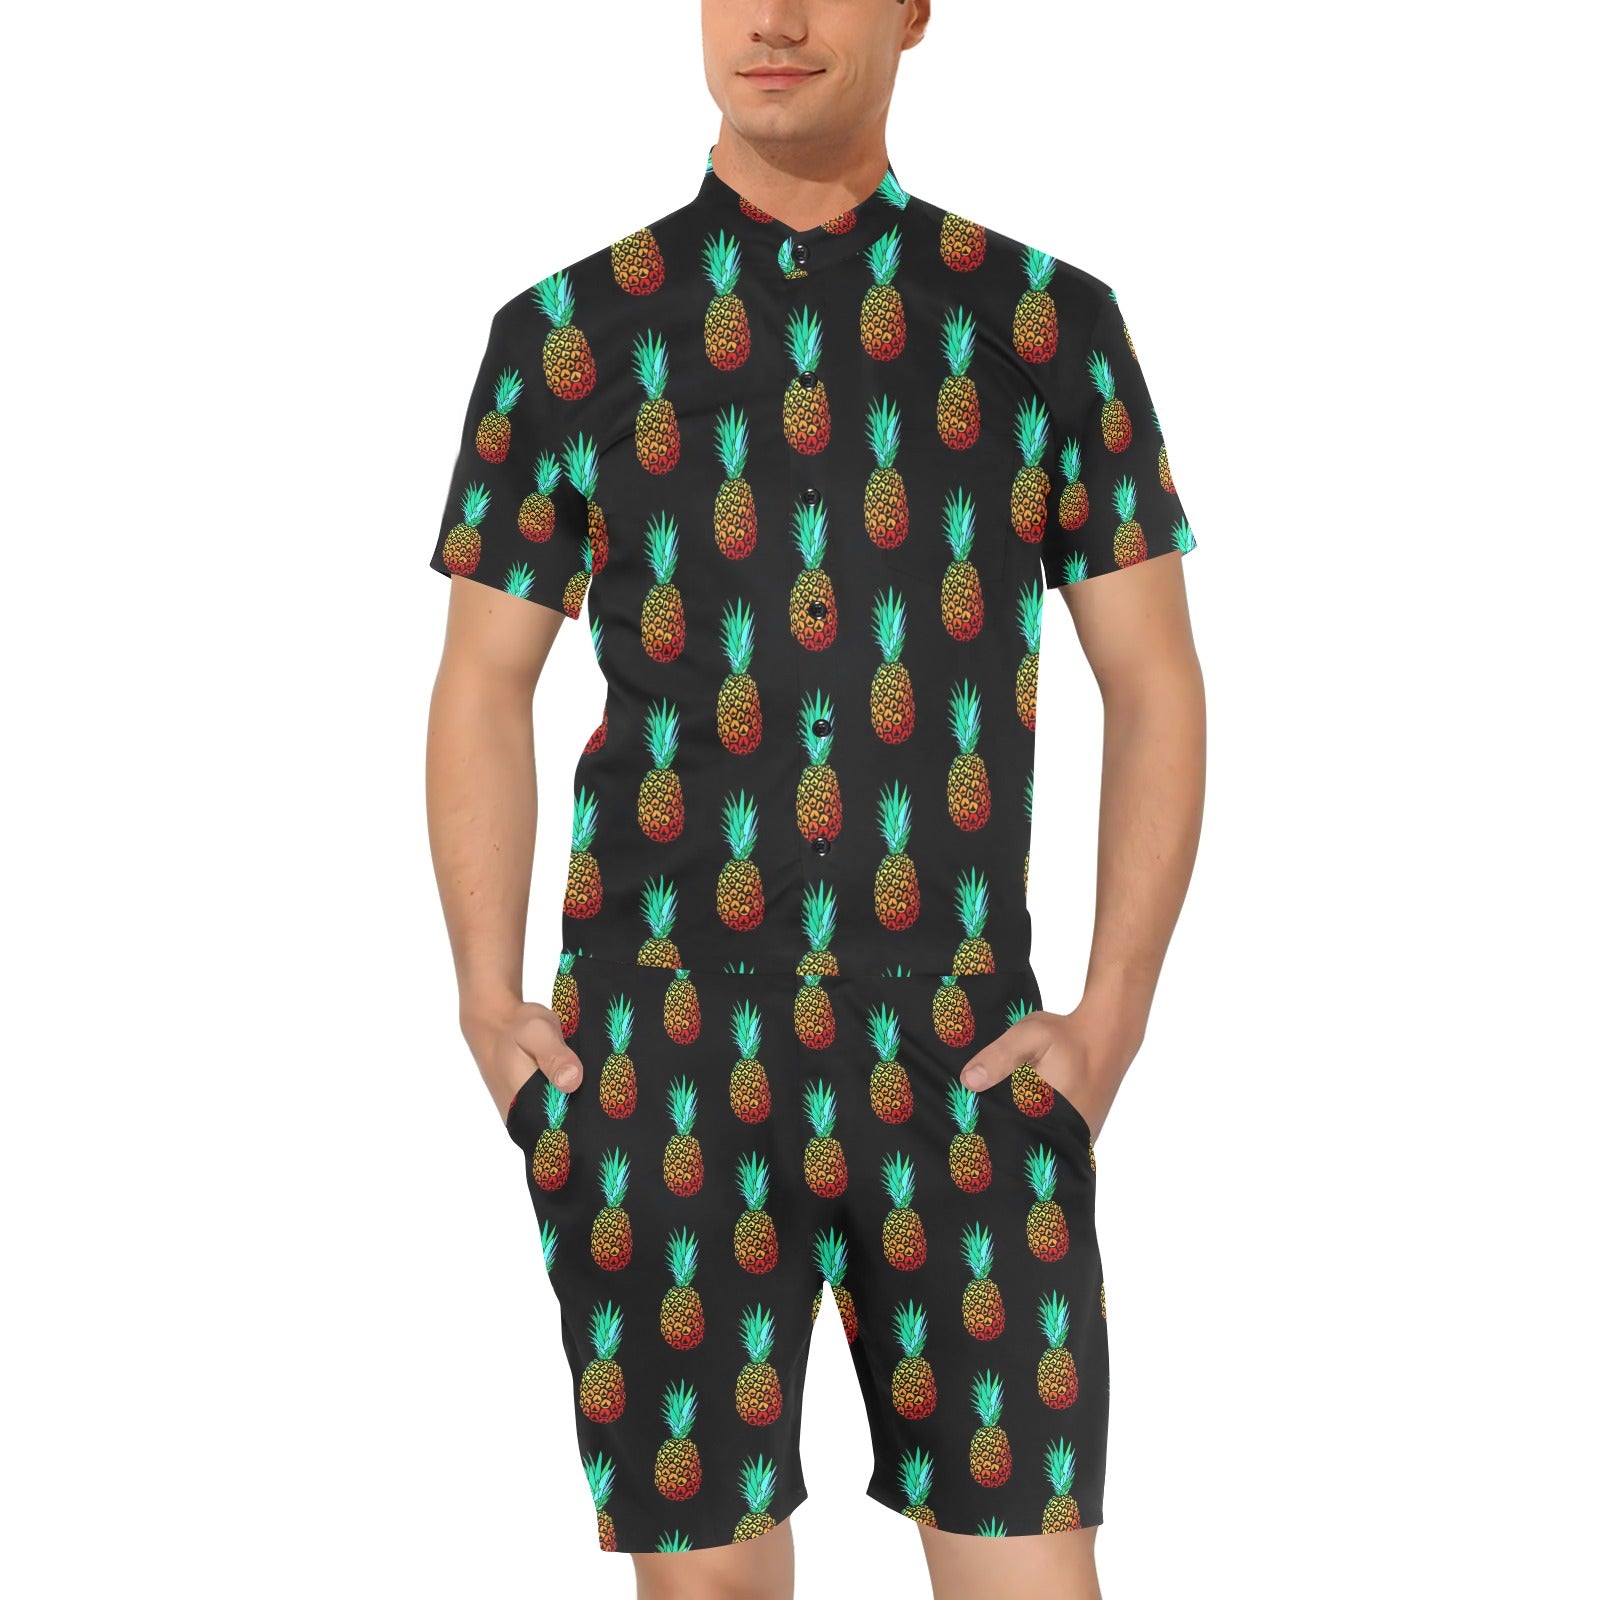 Pineapple Pattern Print Design A05 Men's Romper